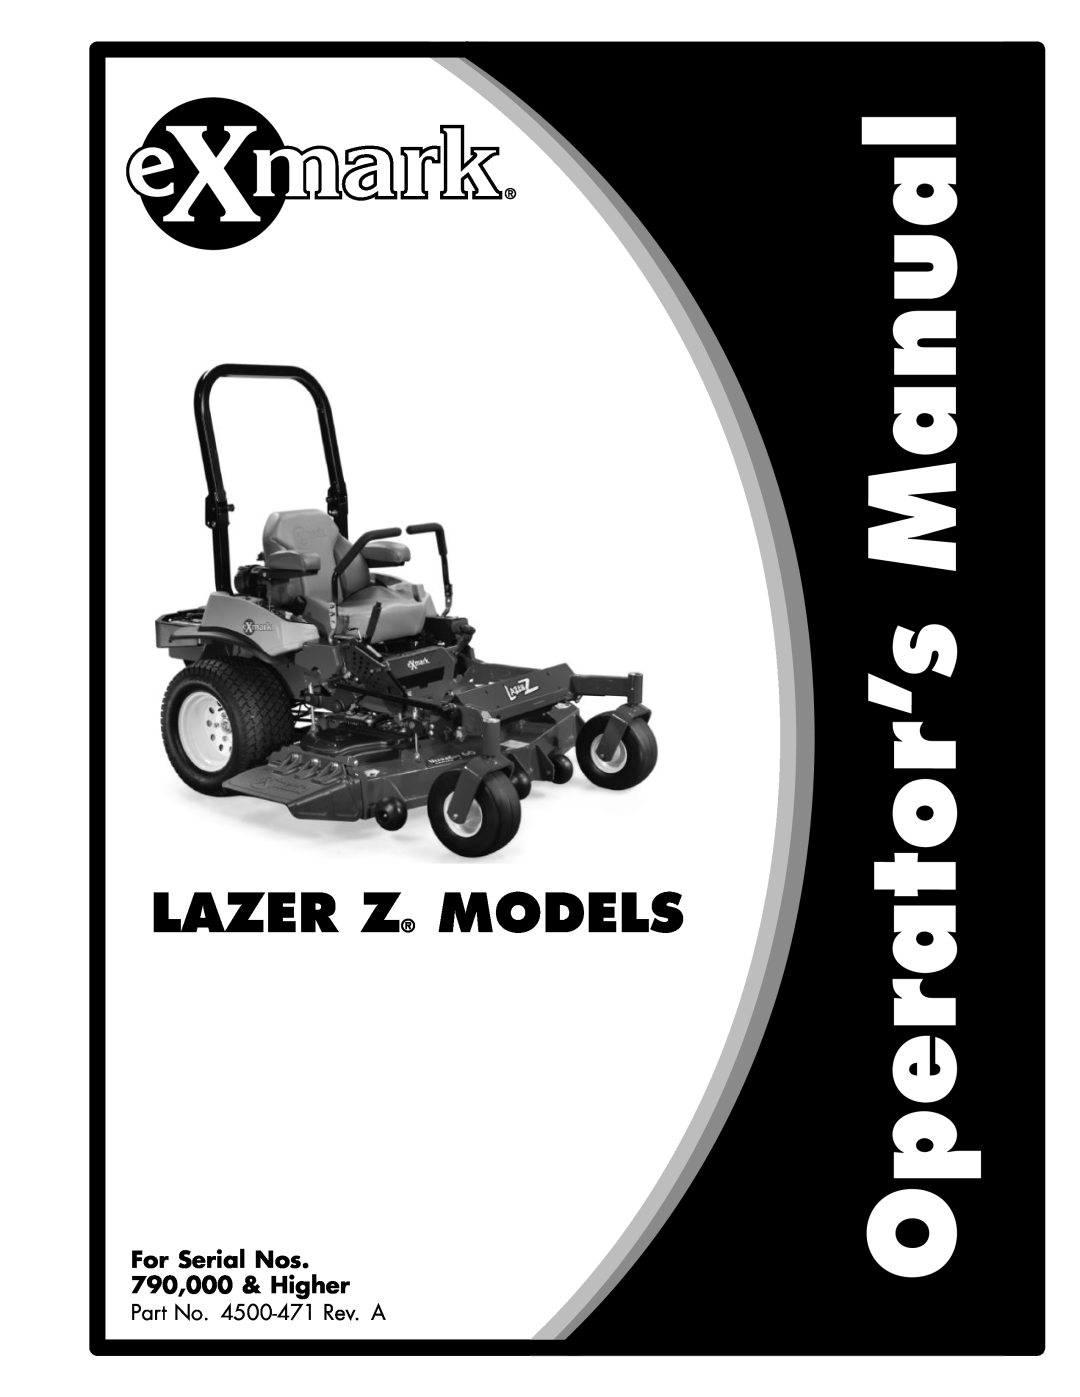 Exmark manual Lazer Z D-Series, For Serial Nos 920,000 & Higher Lazer Z LZD Units, Part No. 4500-919Rev. A 